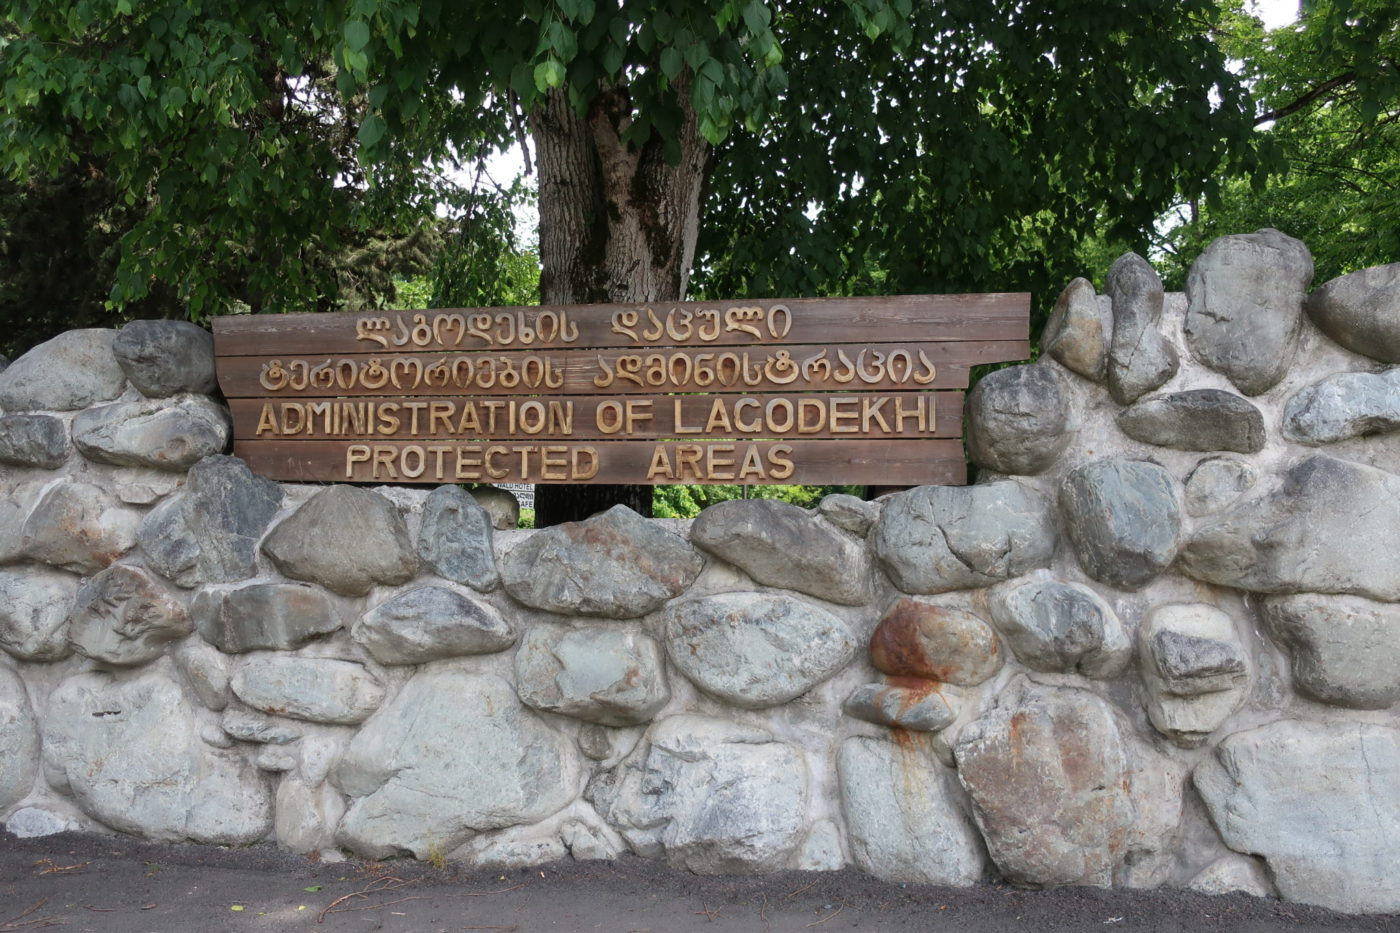 Entrance to Lagodekhi Protected Area